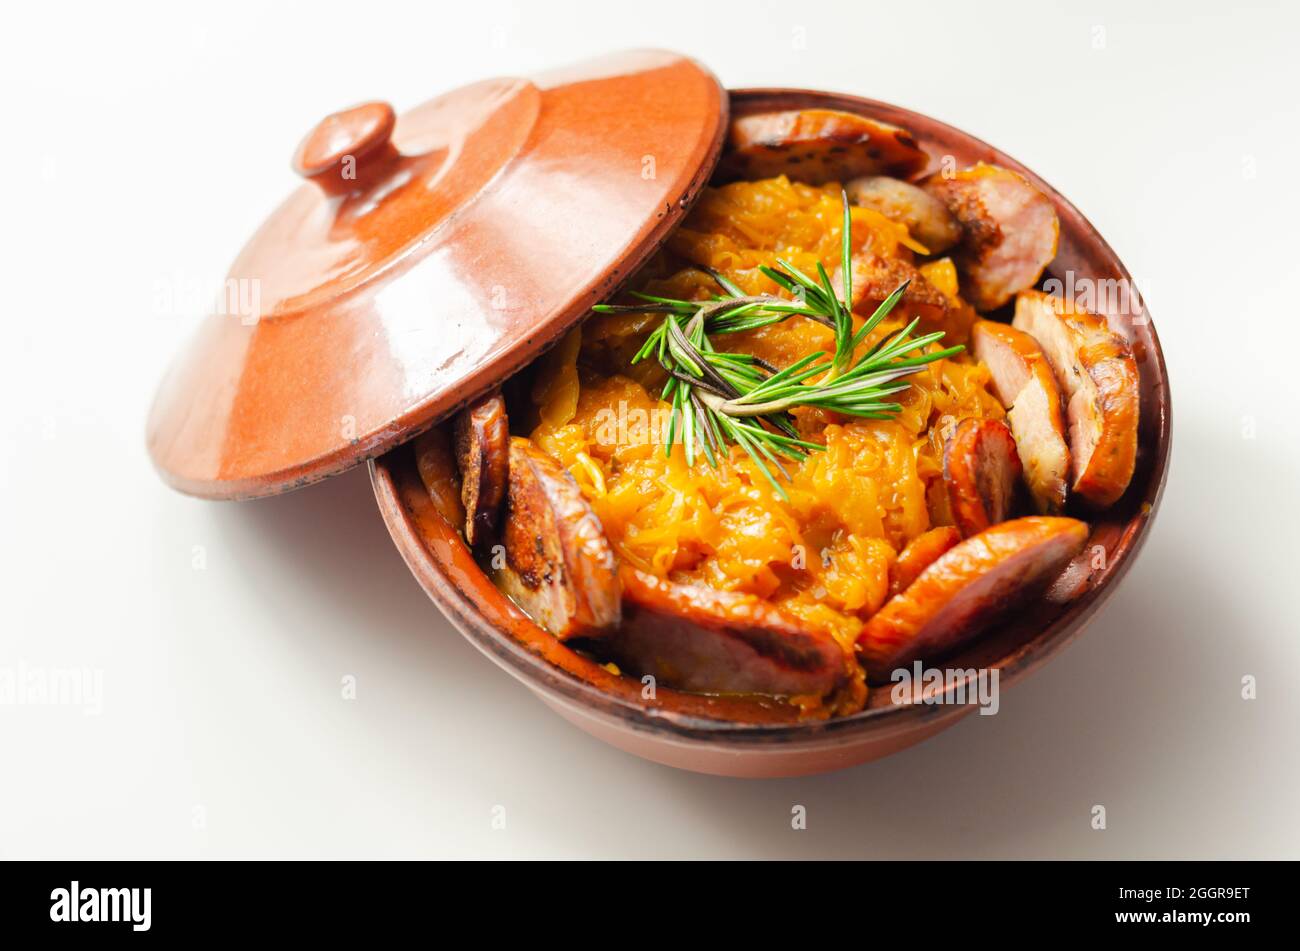 Traditional Polish dish called bigos made of sauerkraut, sausage and mushrooms, food served warm in a ceramic bowl, Eastern European food Stock Photo